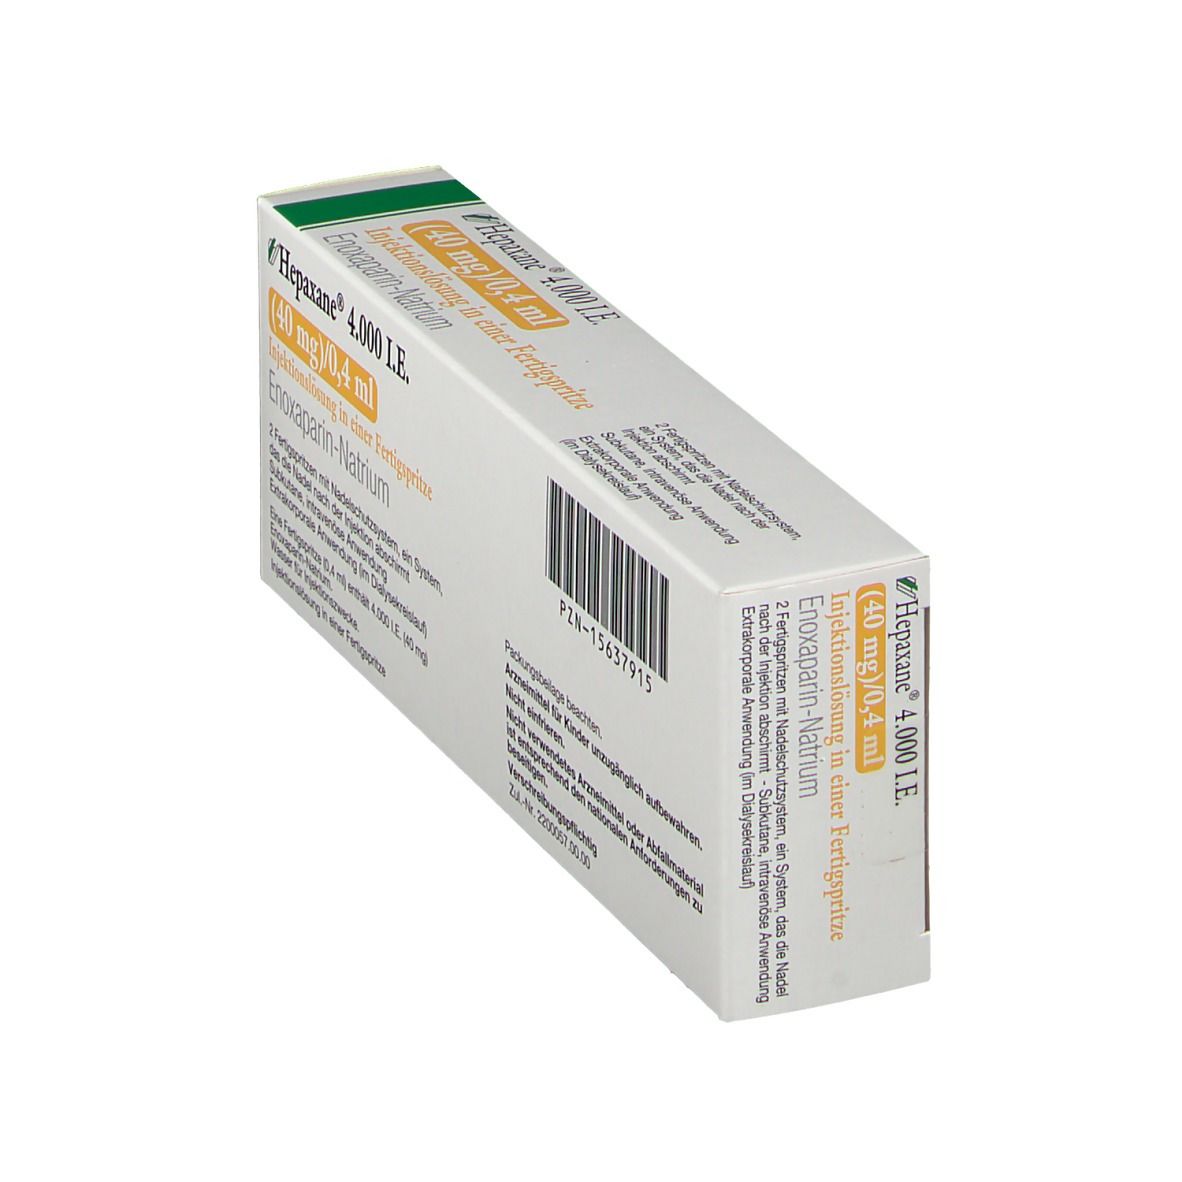 Hepaxane® 4.000 I.E. 40 mg/0,4 ml